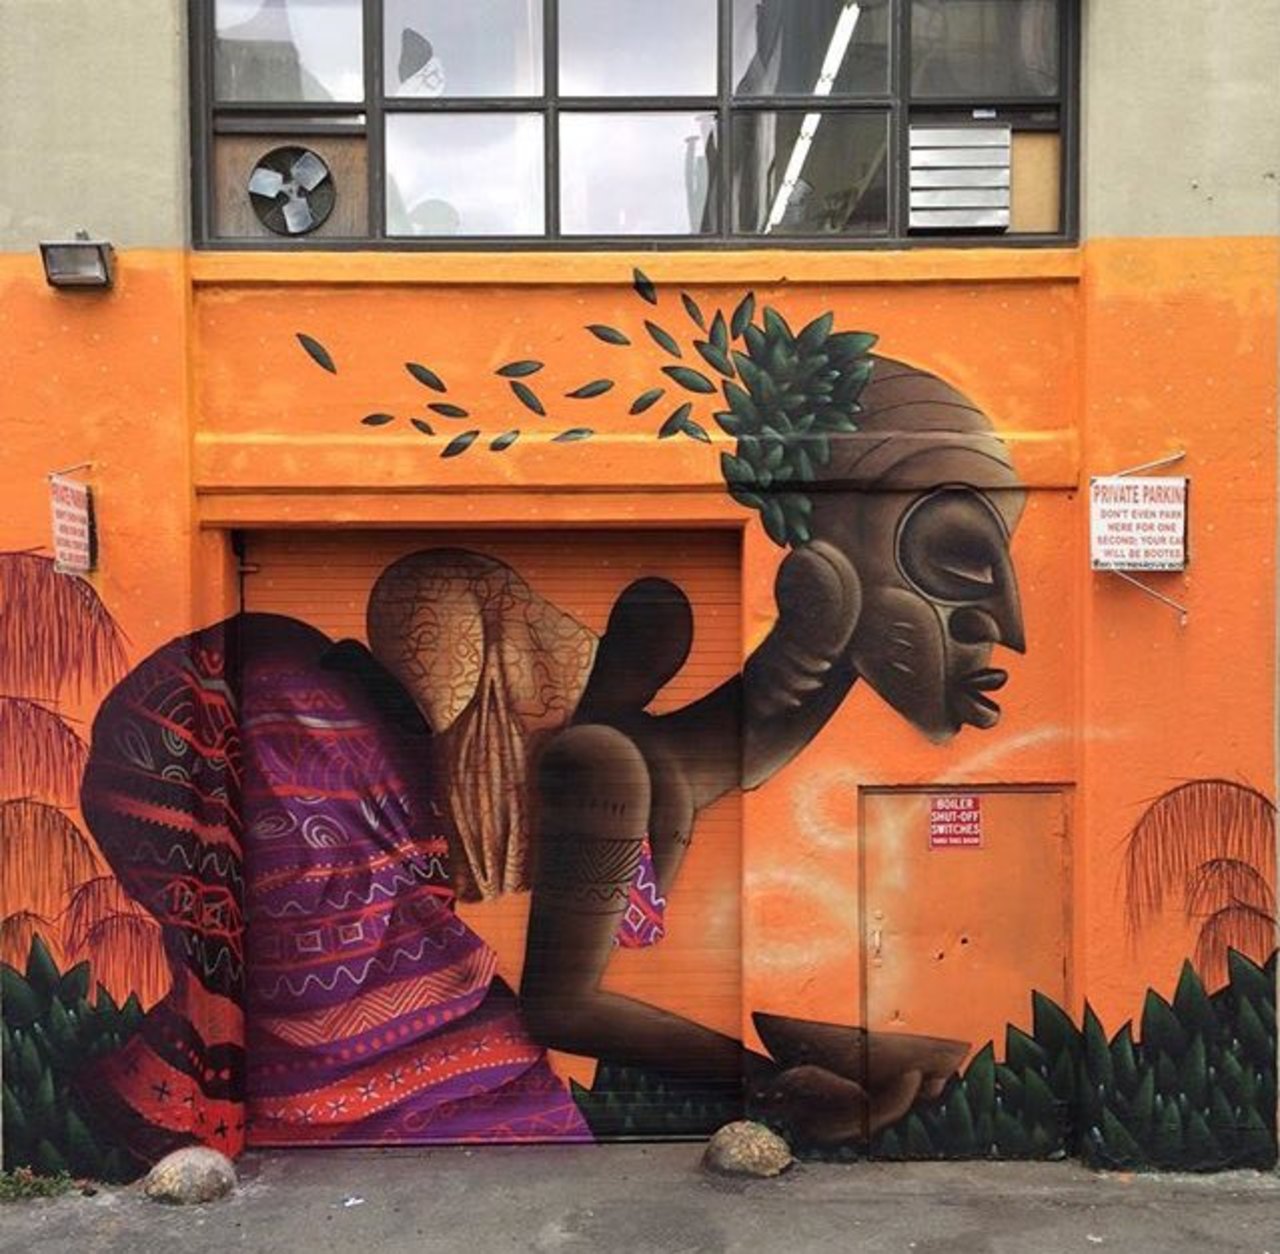 New Street Art by Alexandre Keto in NYC 

#art #graffiti #mural #streetart https://t.co/cQMhKU6JM9